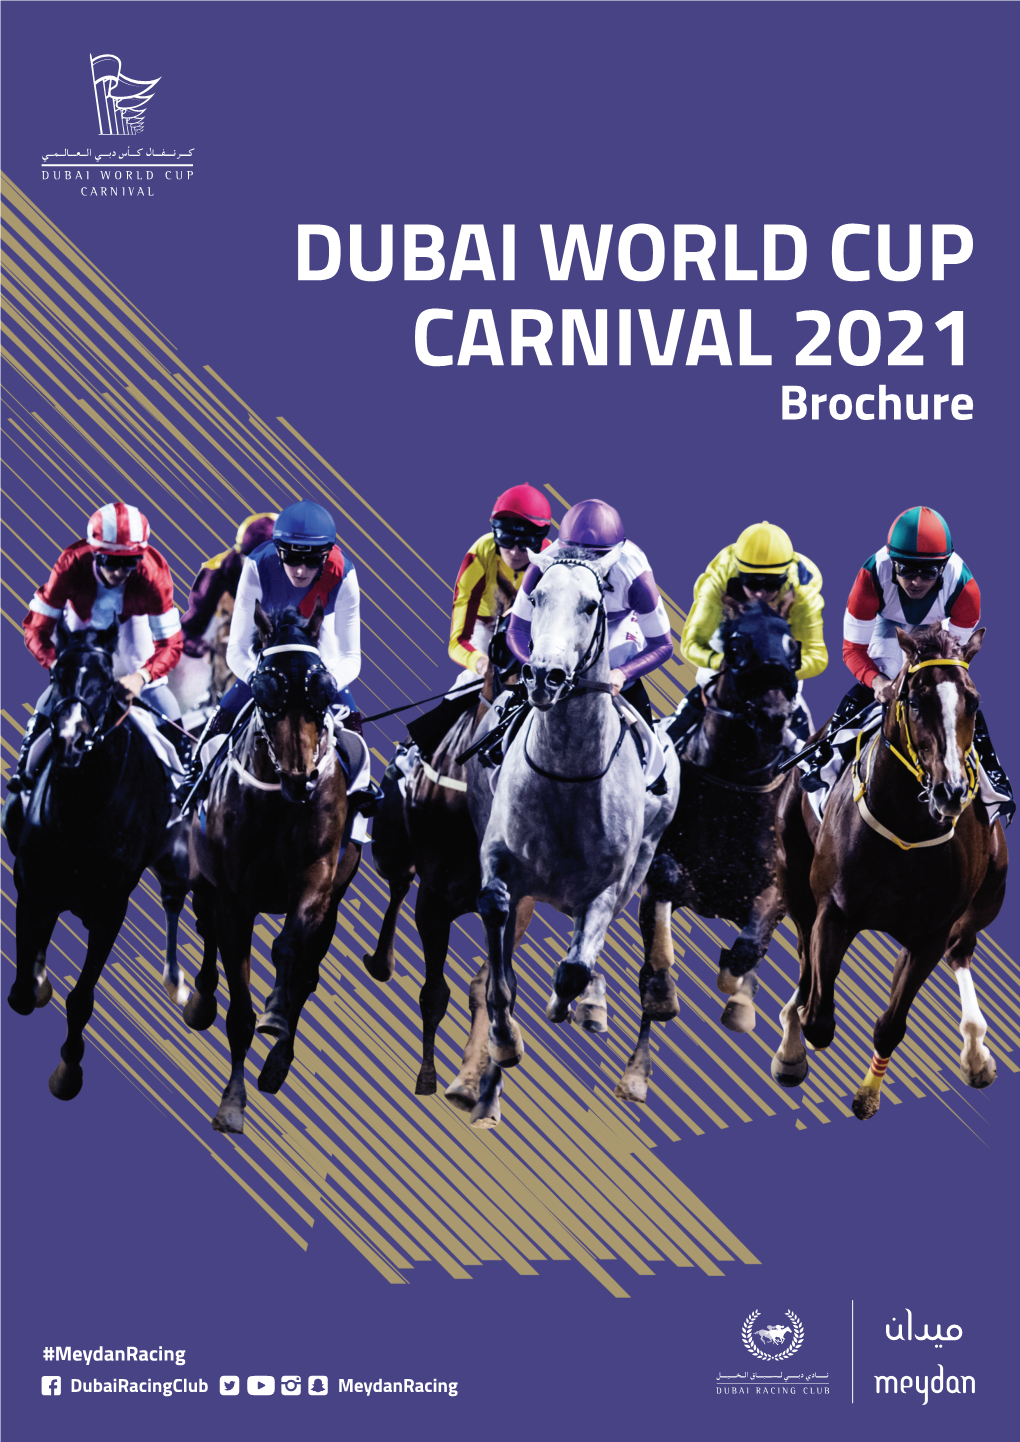 DUBAI WORLD CUP CARNIVAL 2021 Brochure